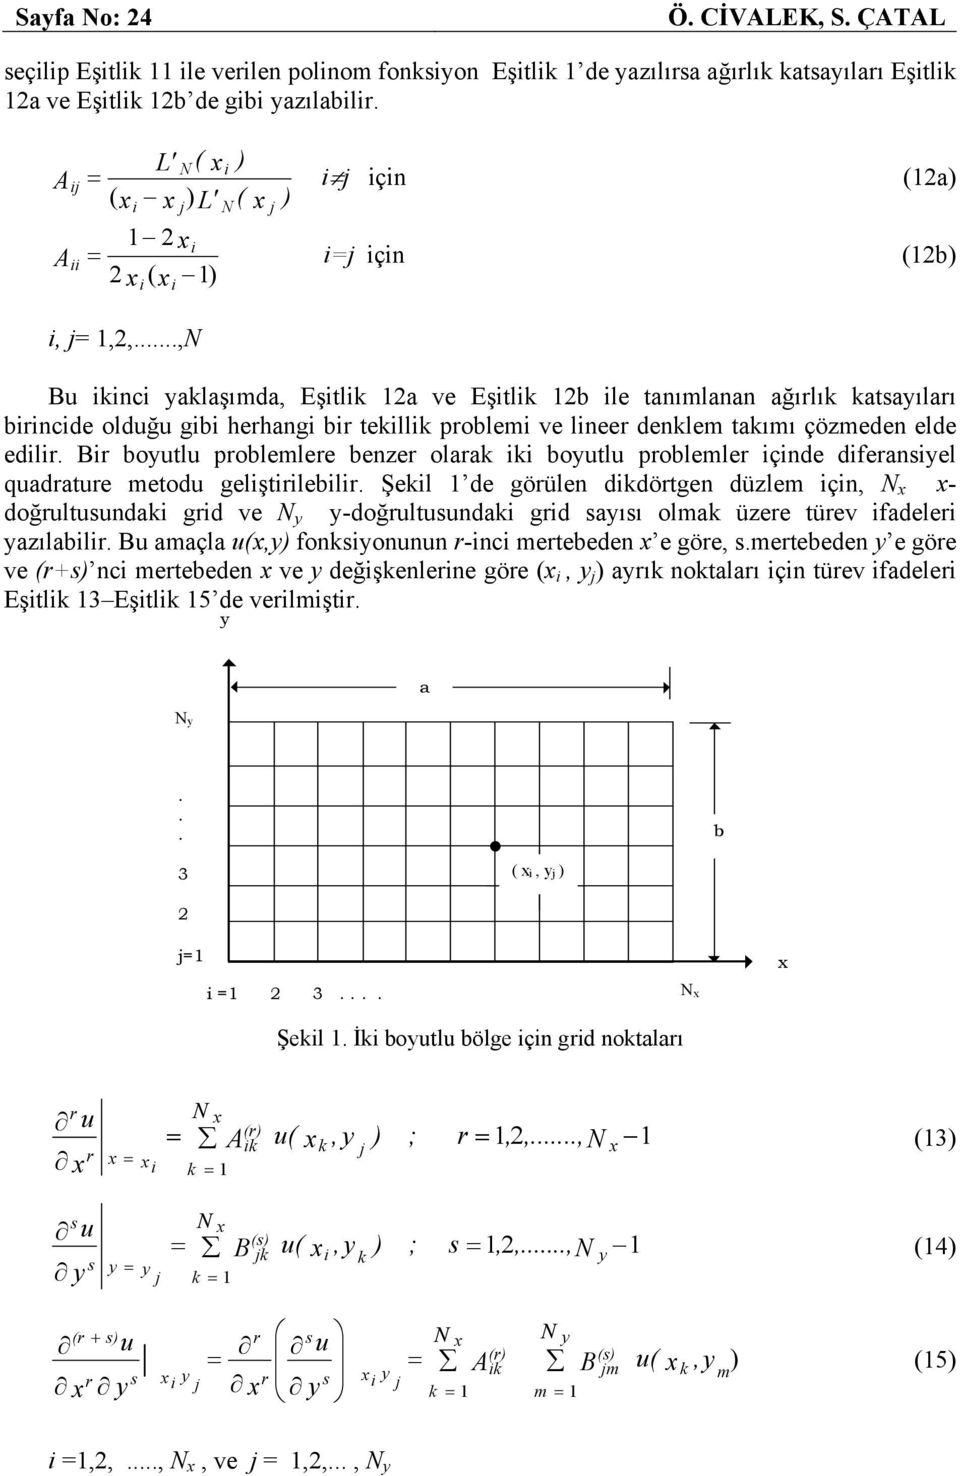 r boutlu problemlere benzer olara boutlu problemler çnde dferansel quadrature metodu gelştrleblr.